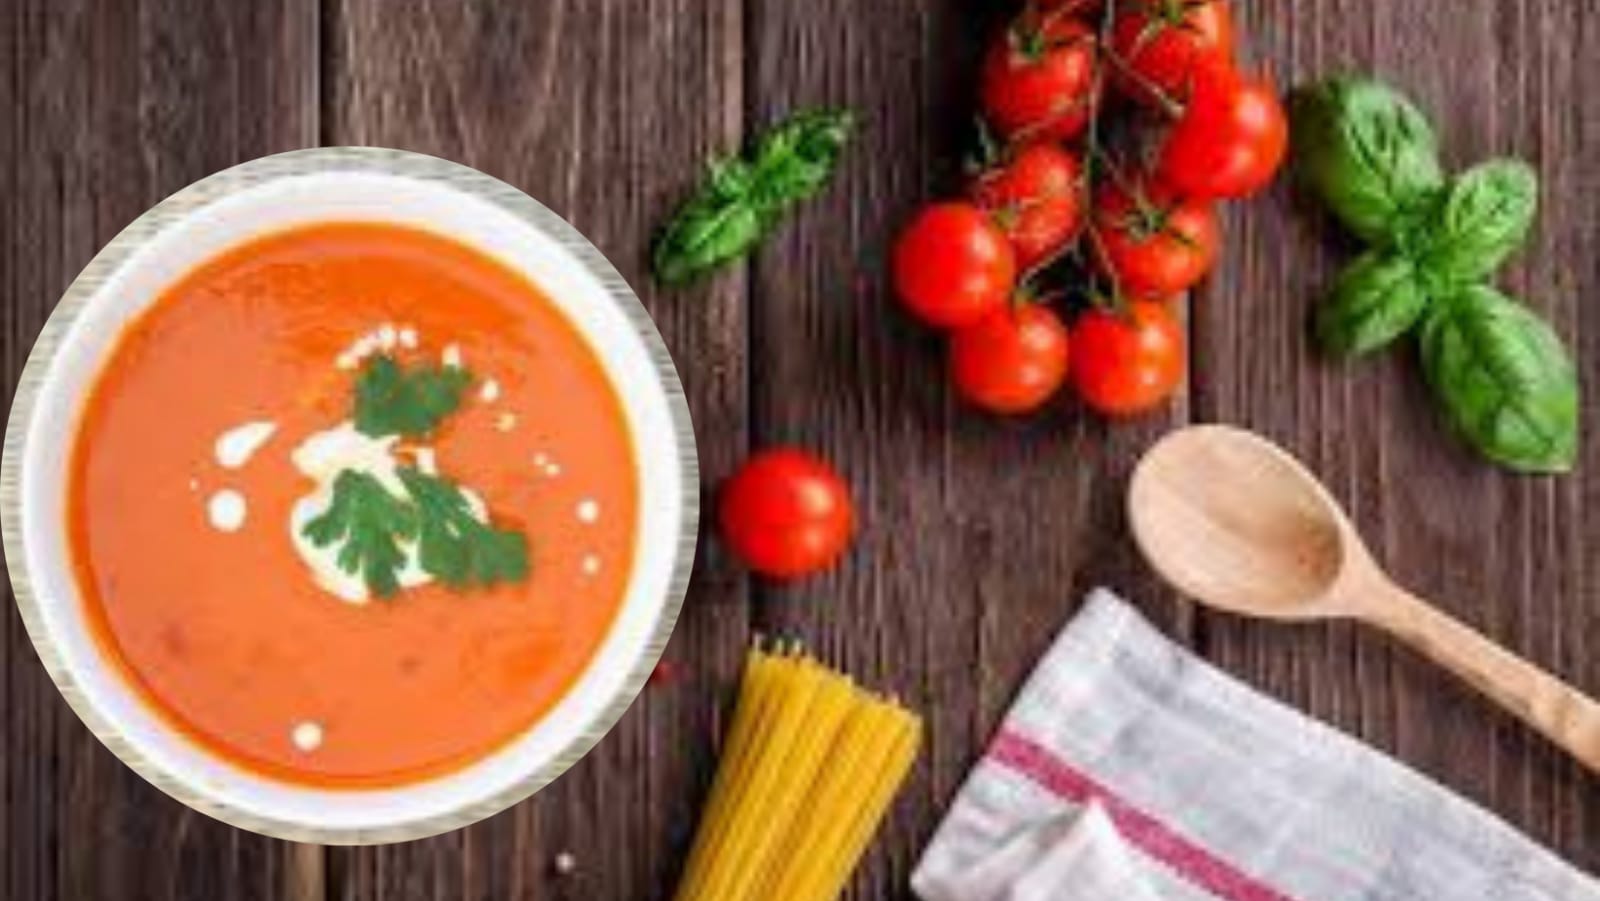 Easy To Make Garlic-Tomato Soup Recipe